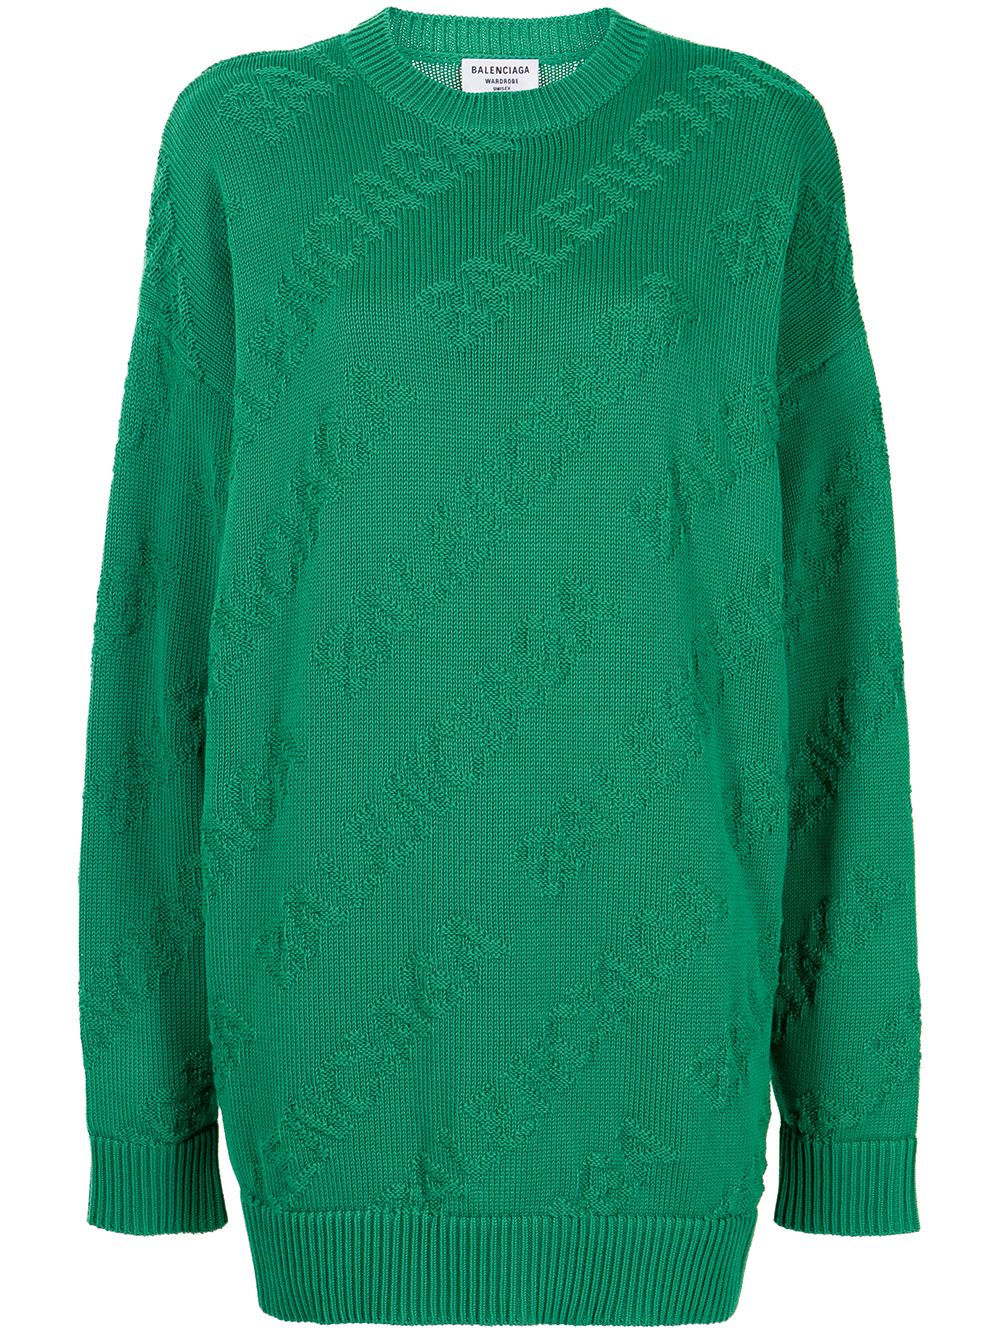 BALENCIAGA Maglione oversize in cotone verde con logo Balenciaga intarsiato